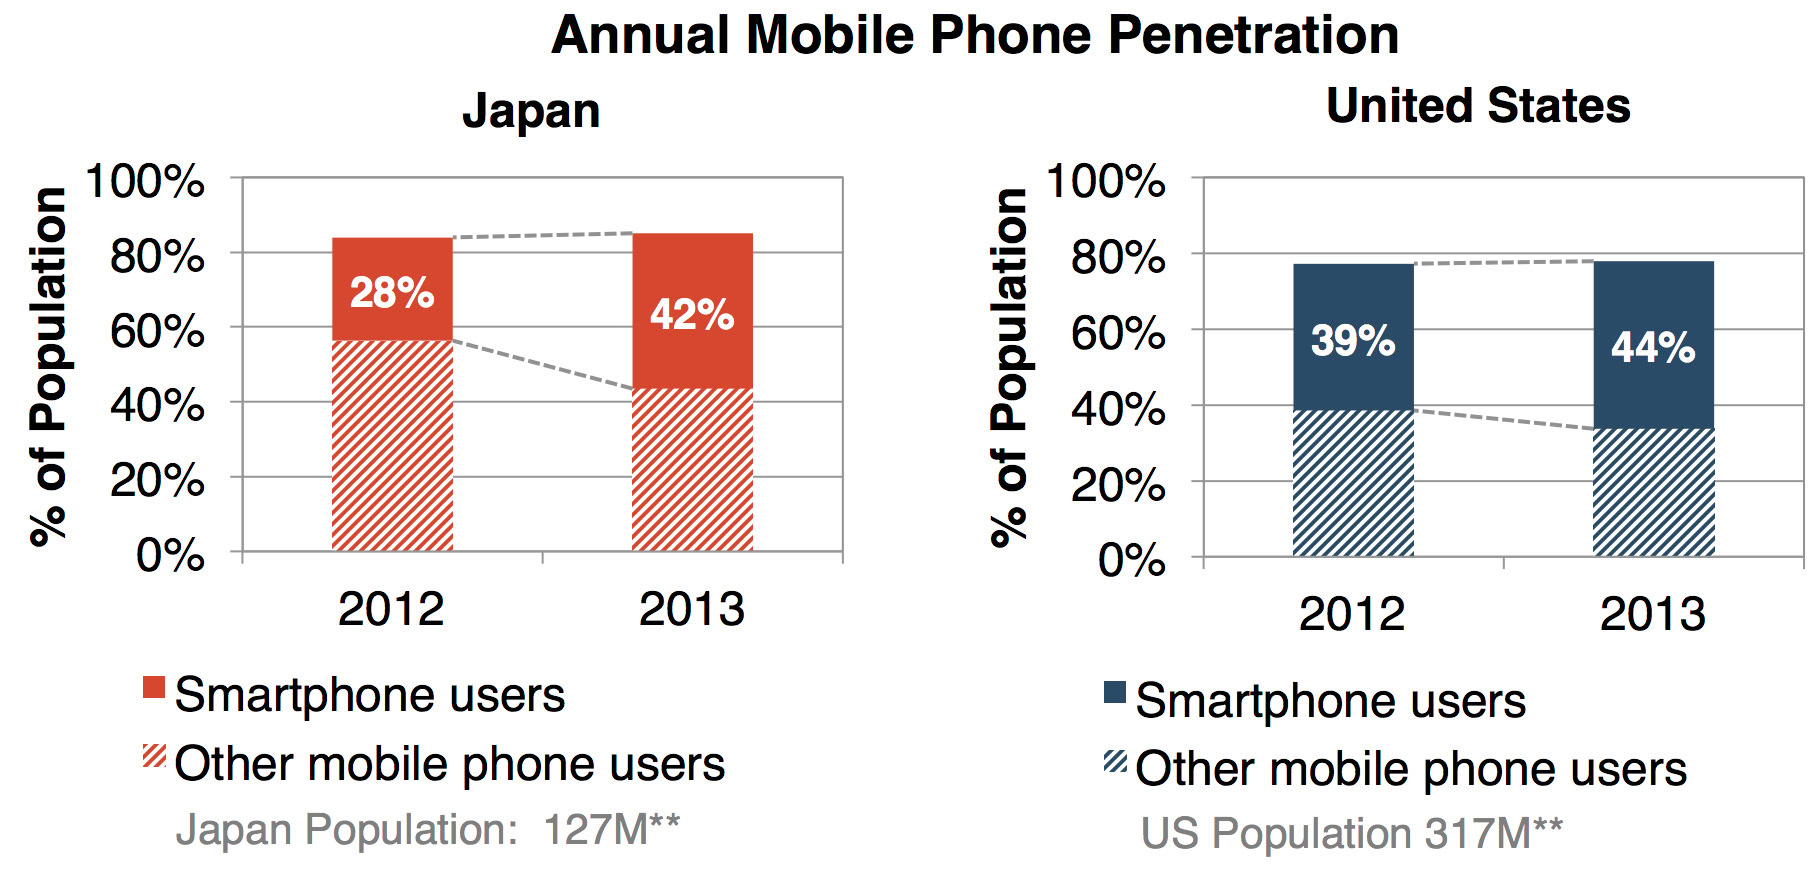 Japan mobile penetration